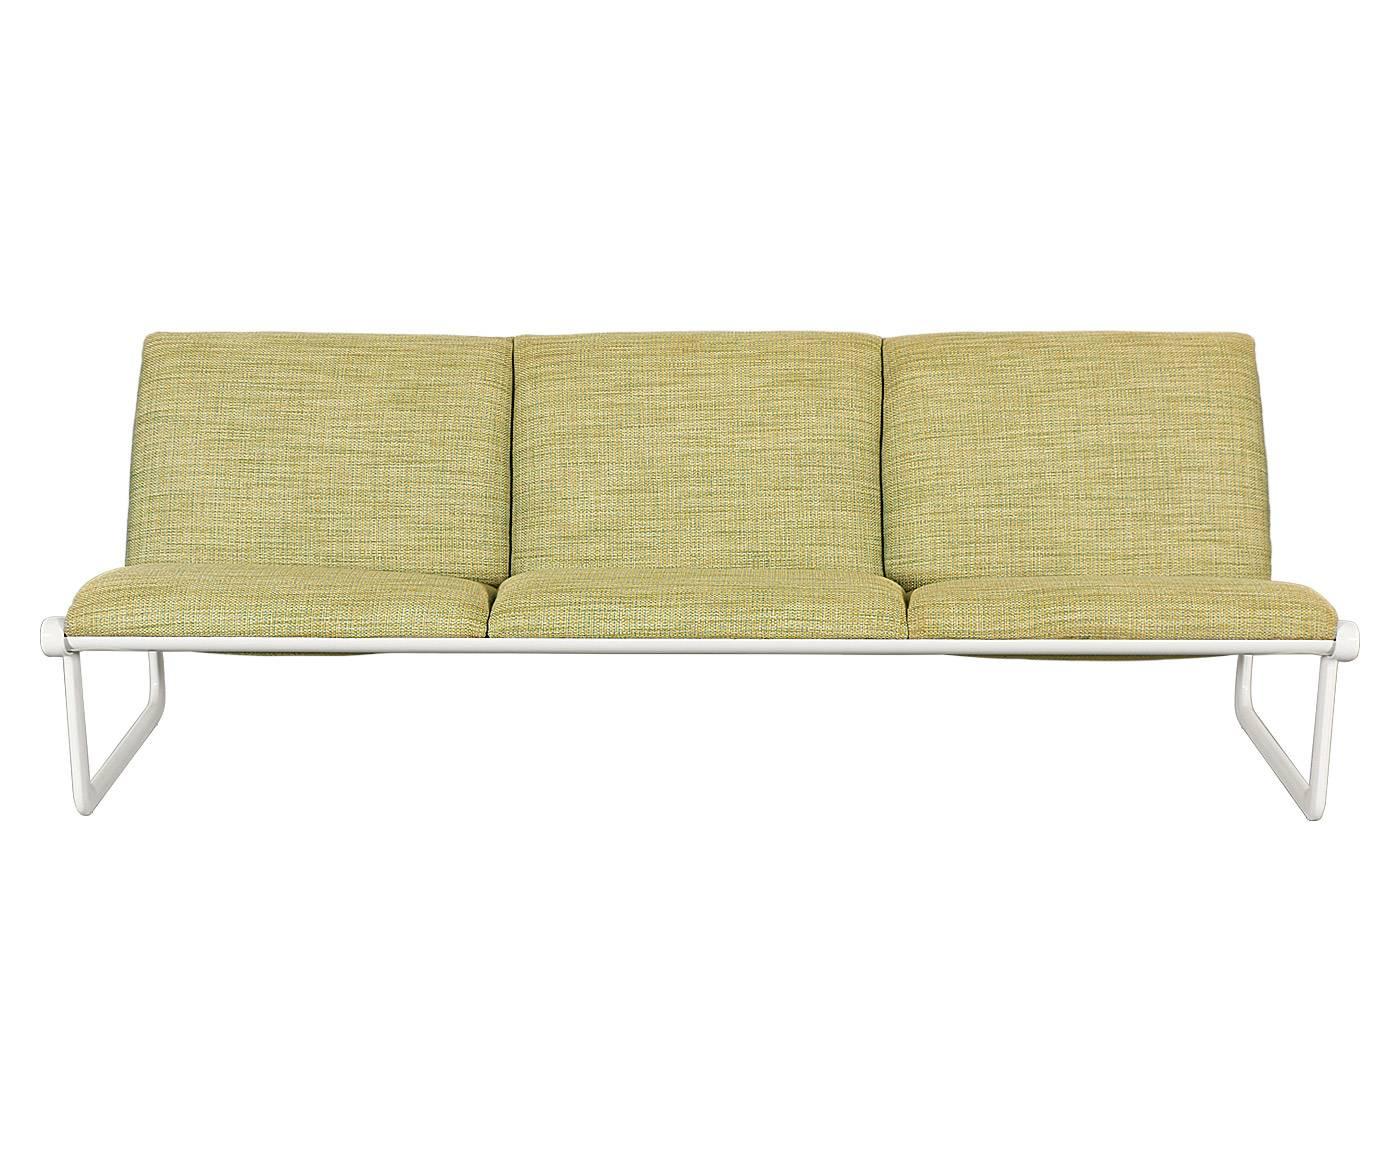 Hannah Morrison Three-Seat “Sling” Sofa for Knoll